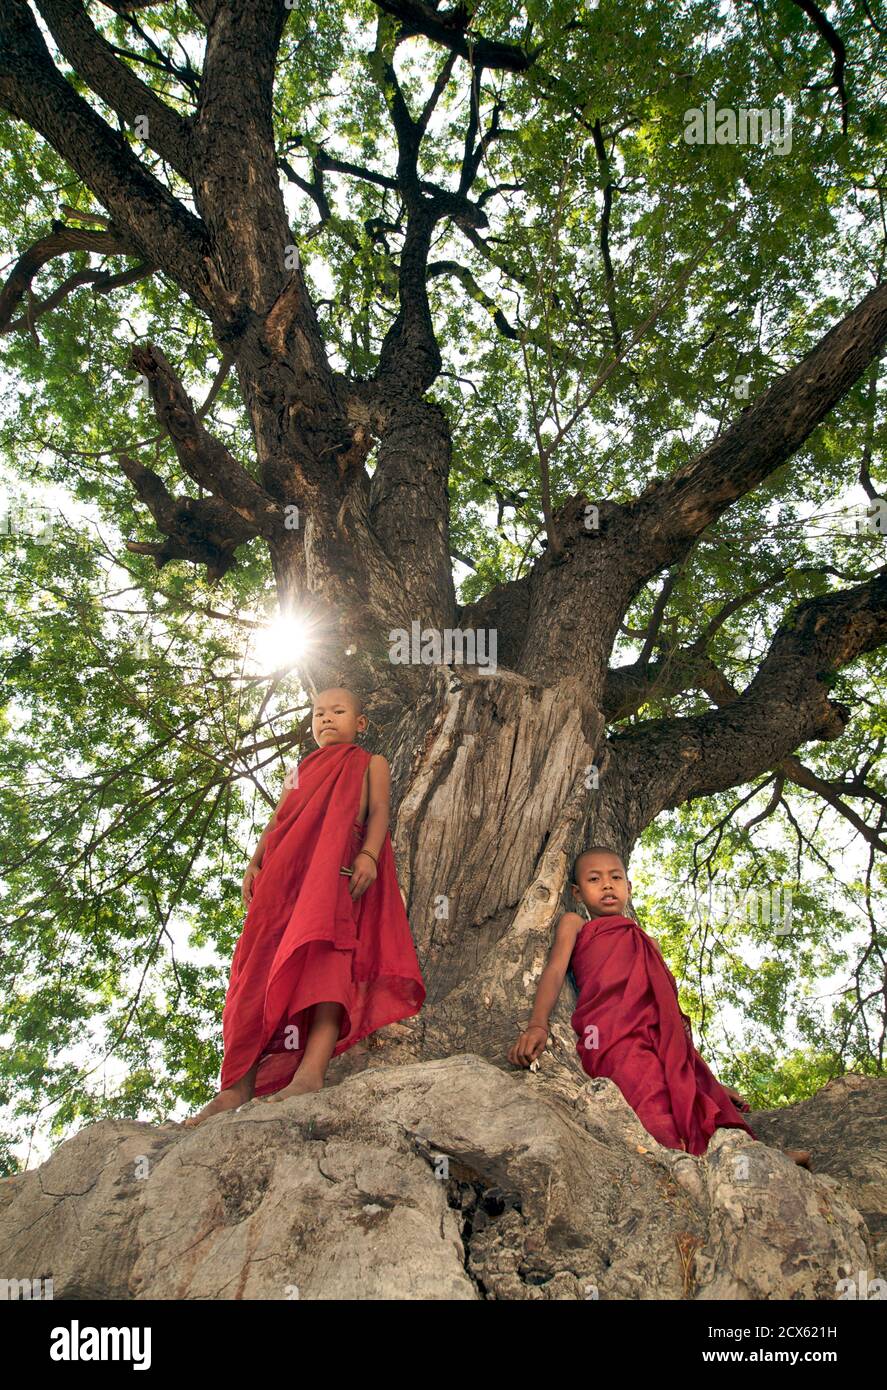 Novice buddhist monks standing at a tree, Sagaing region near Mandalay, Burma. Myanmar Stock Photo